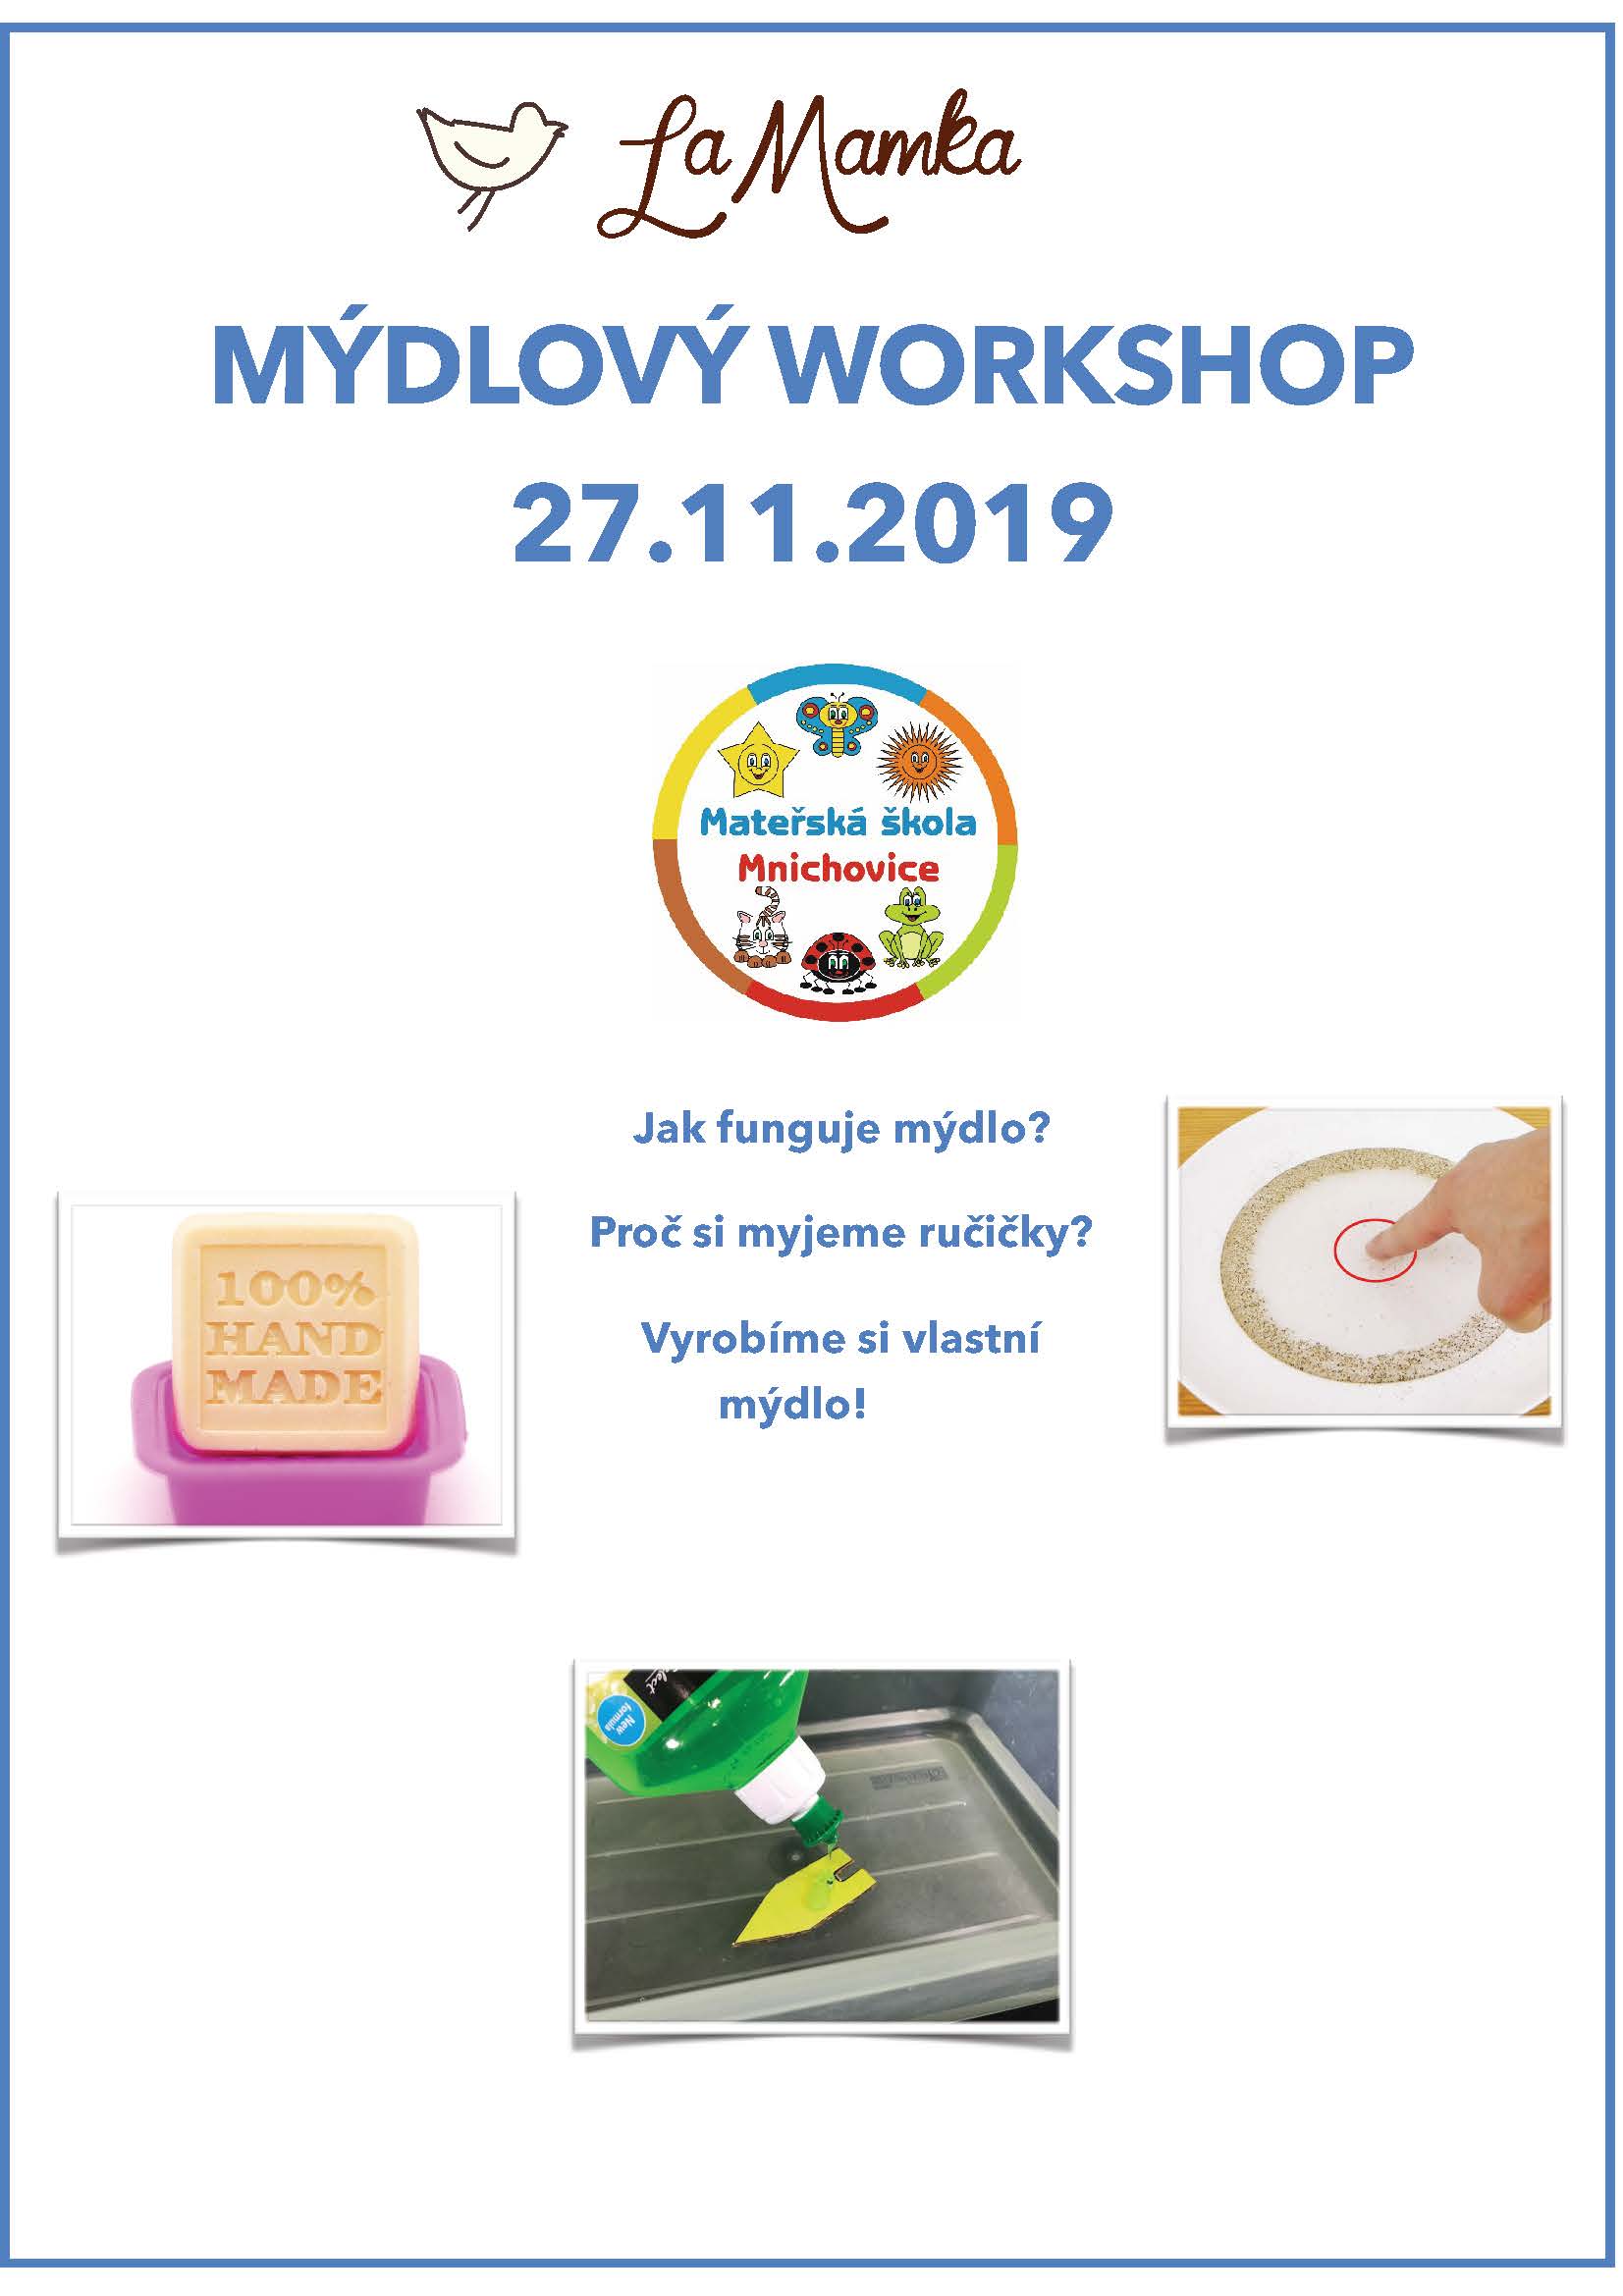 Mydlovy workshop1